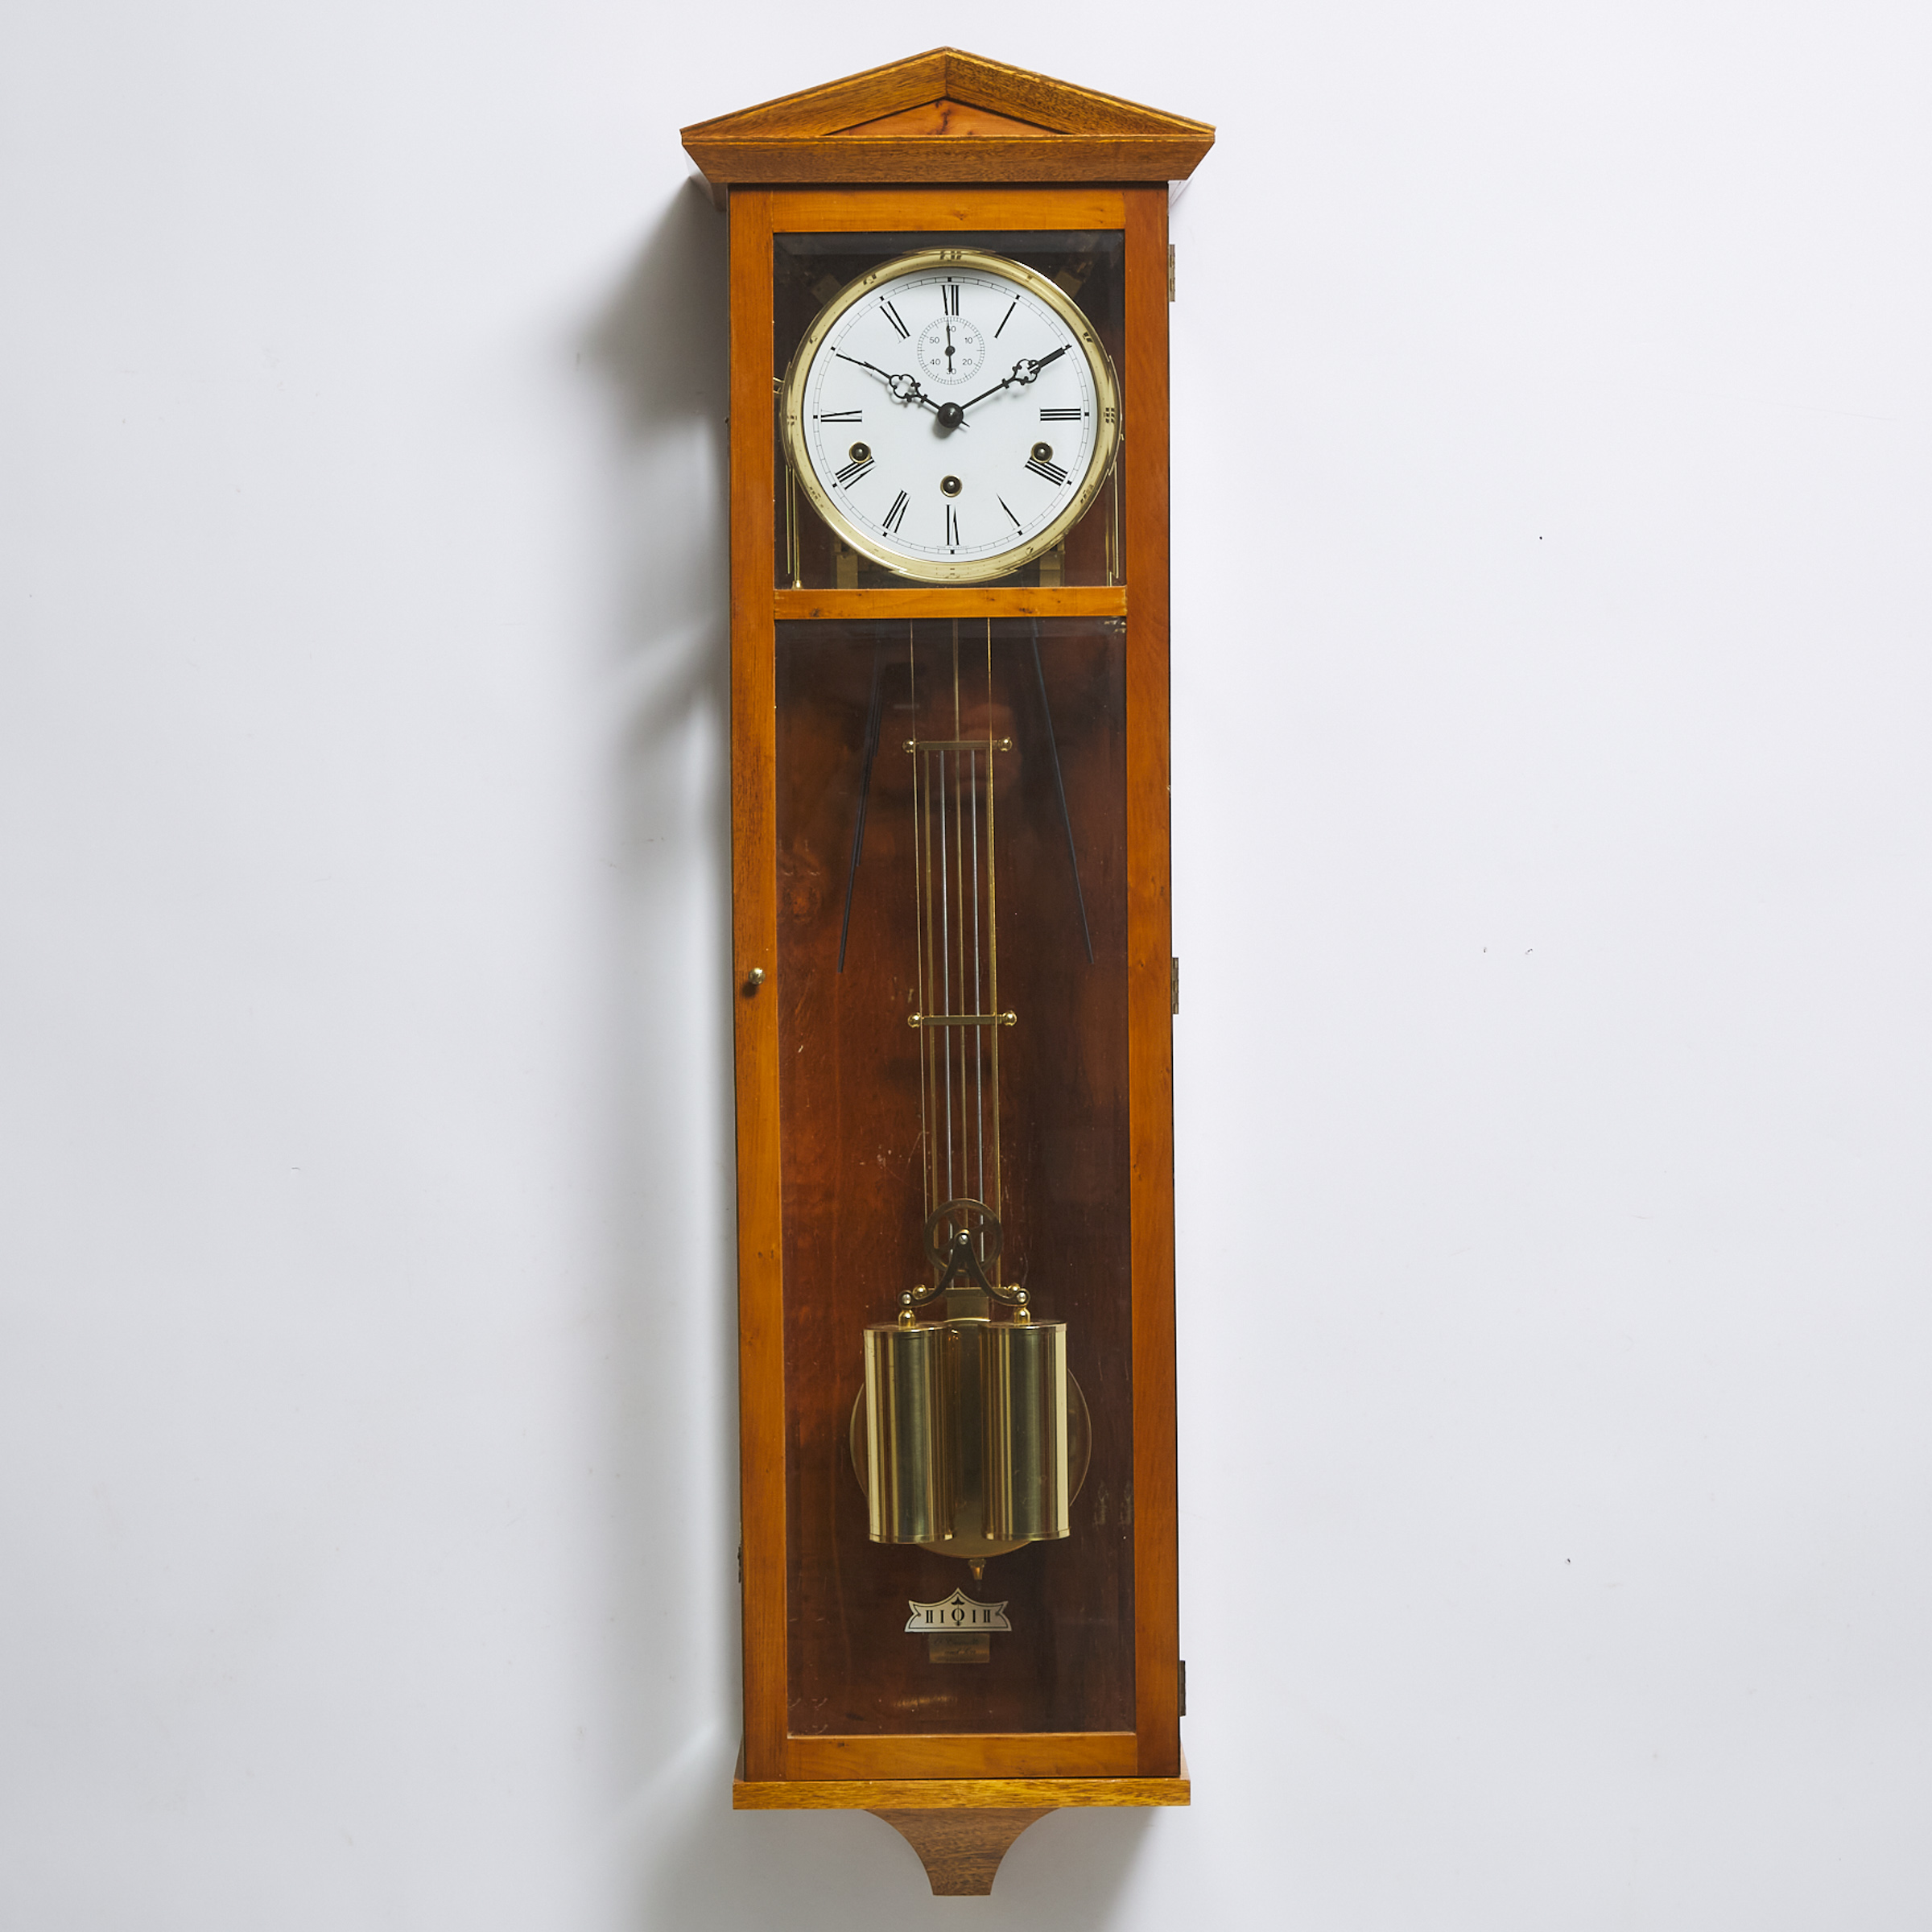 Comitti of London Quarter Chiming Regulator Style Wall Clock, 20th century